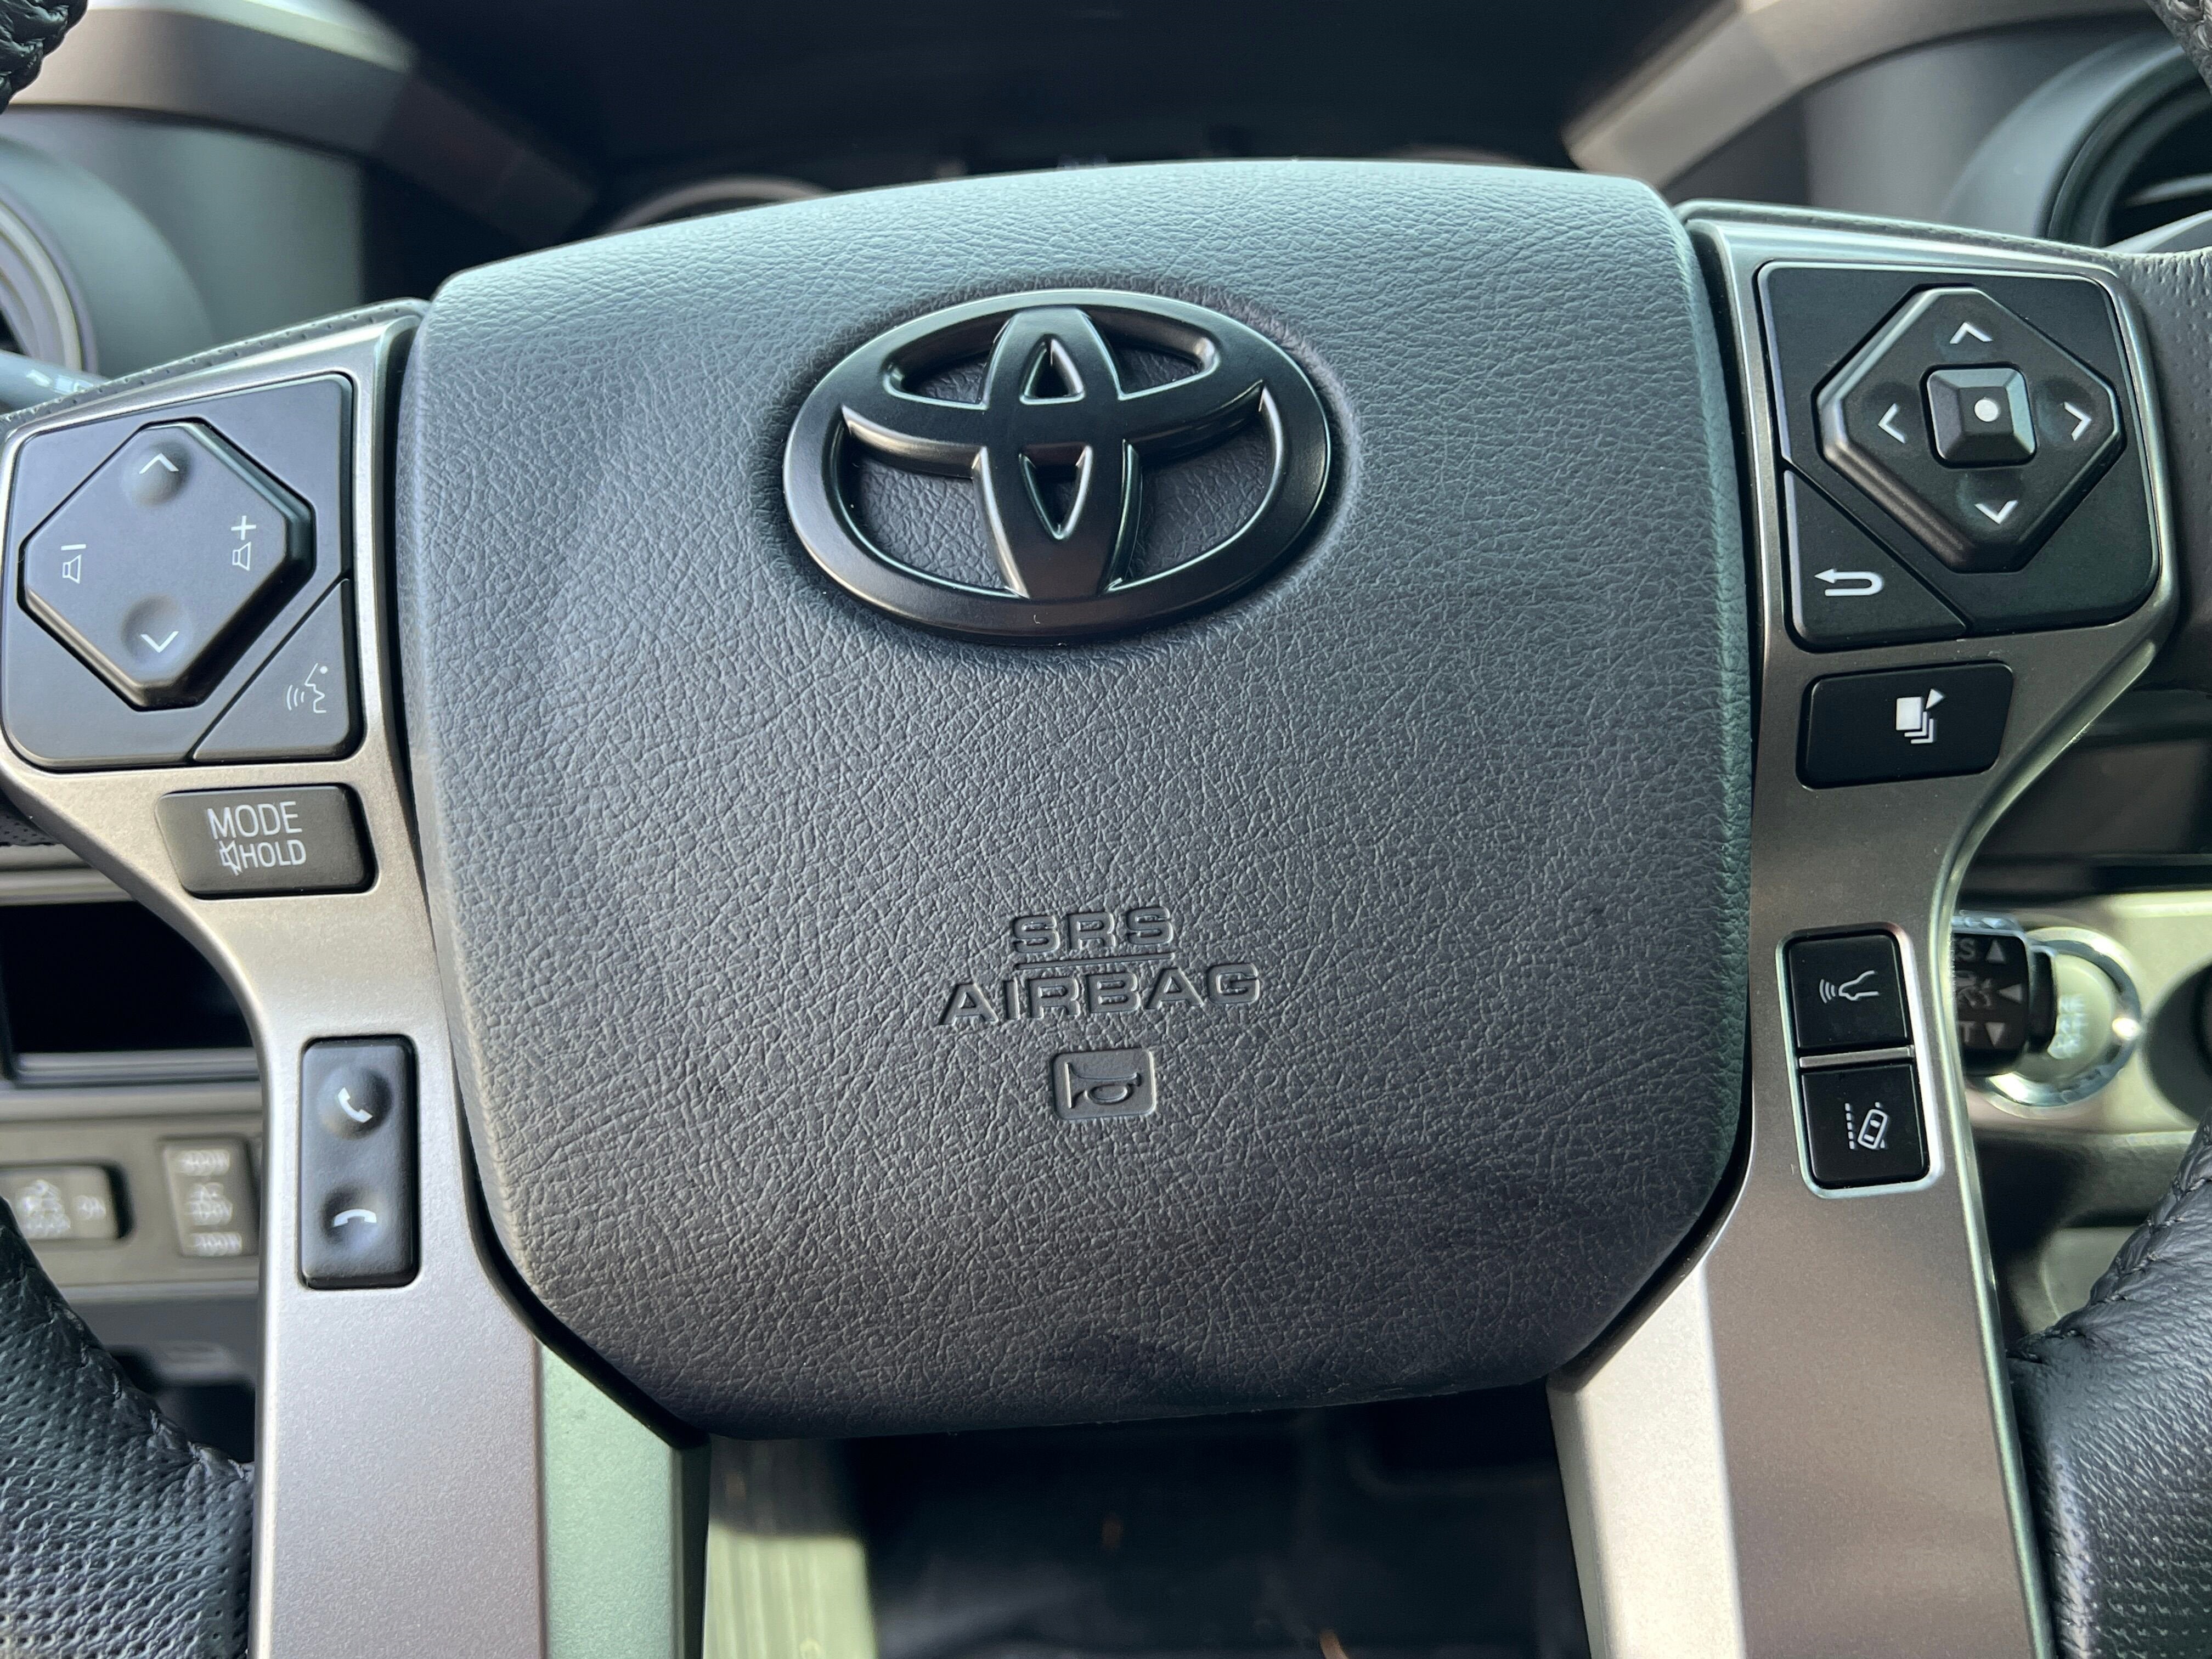 2019 Toyota Tacoma 4WD Limited